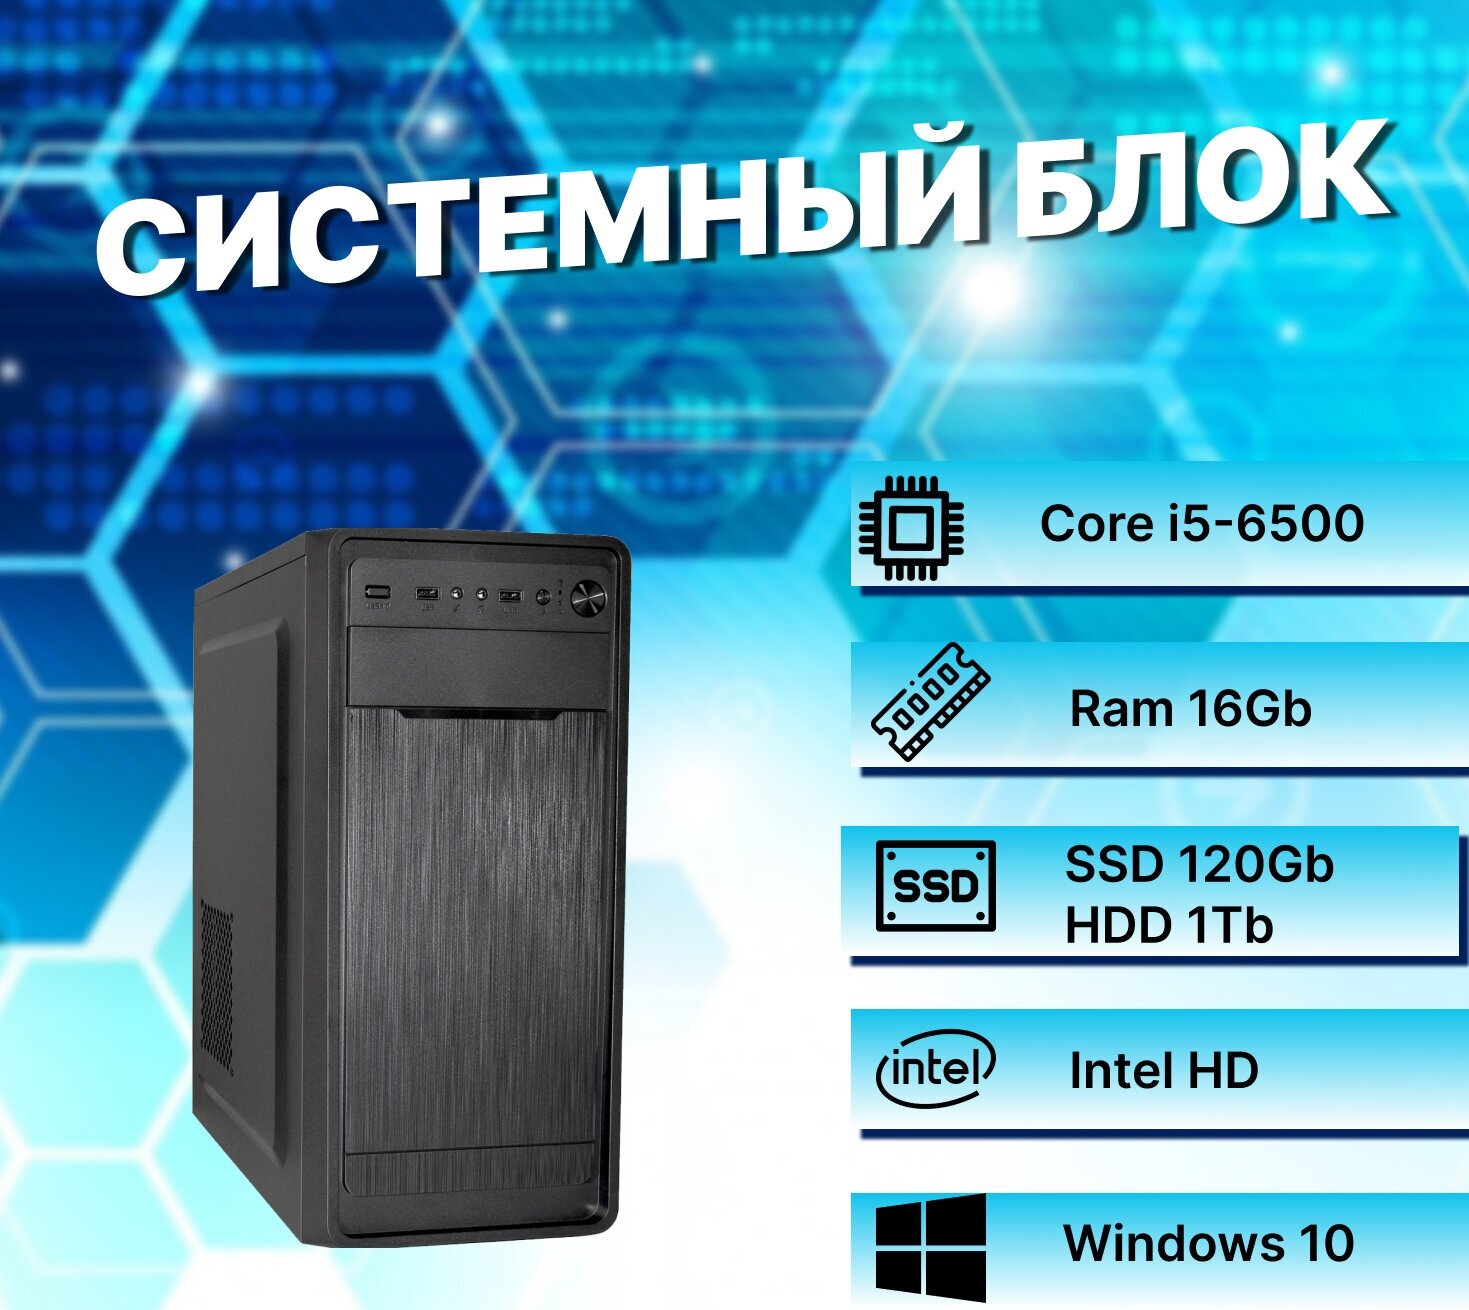 Системный блок Intel Core I5-6500 (3.2ГГц)/ RAM 16Gb/ SSD 120Gb/ HDD 1Tb/ Intel HD/ Windows 10 Pro